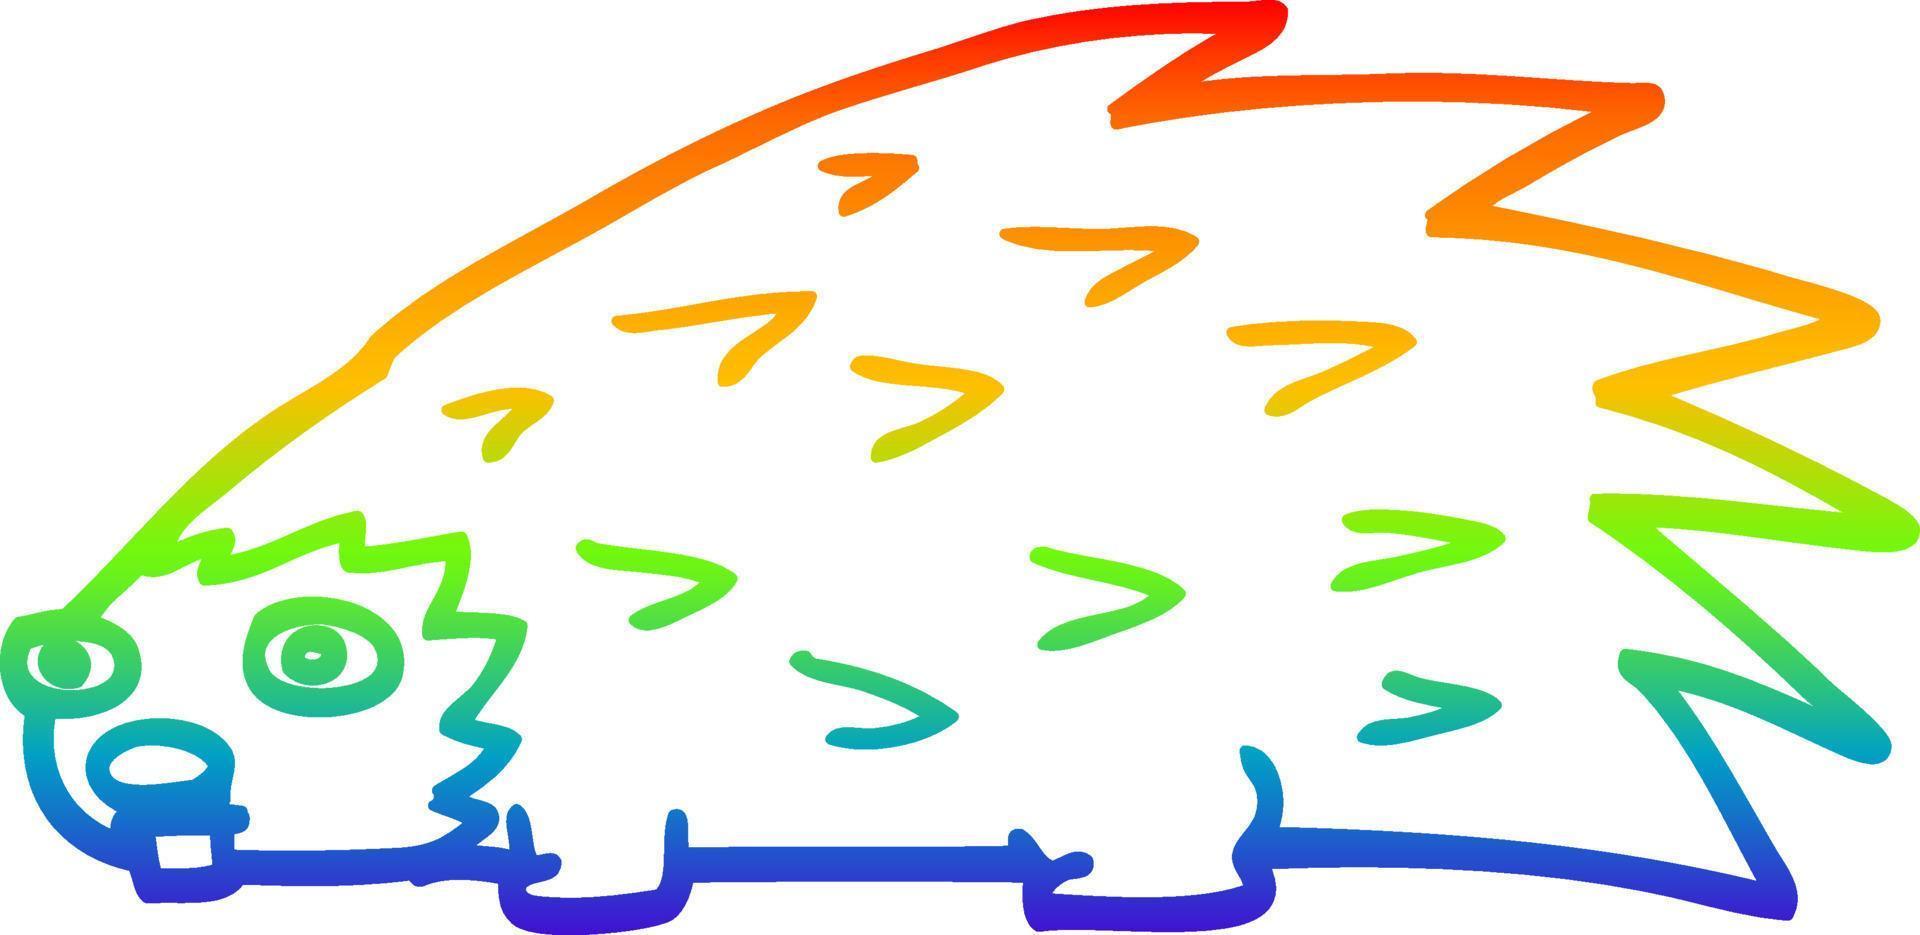 arco iris gradiente línea dibujo dibujos animados puntiagudo erizo vector